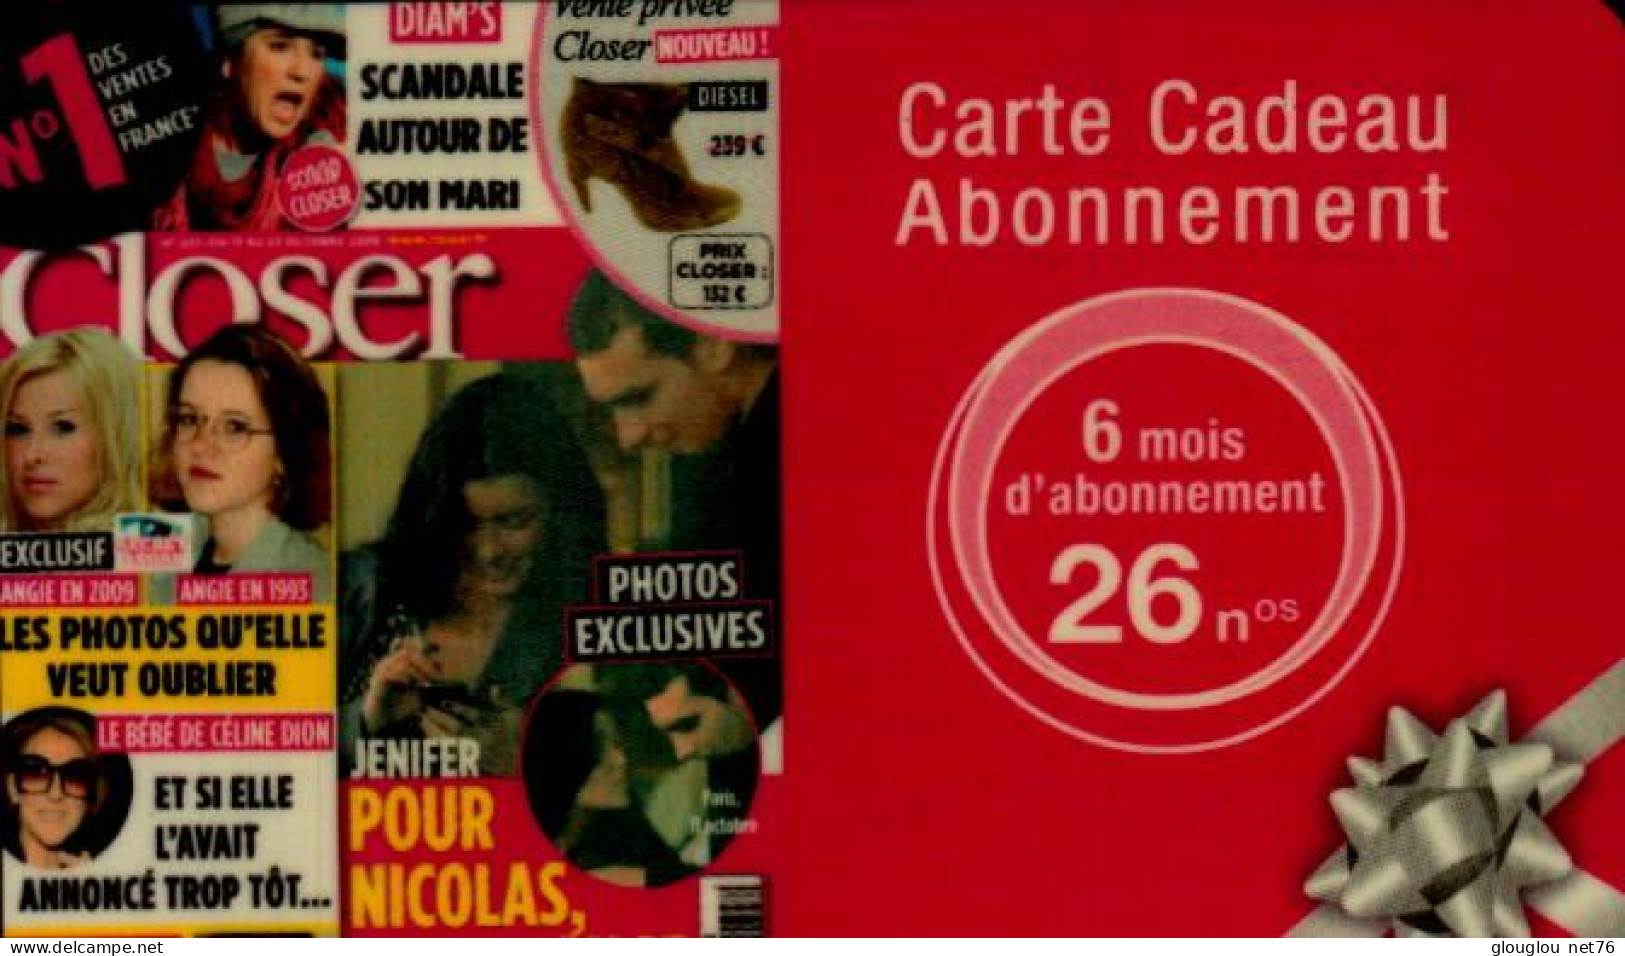 CARTE CADEAU ABONNEMENT 6 MOIS  26 No    CLOSER - Gift And Loyalty Cards